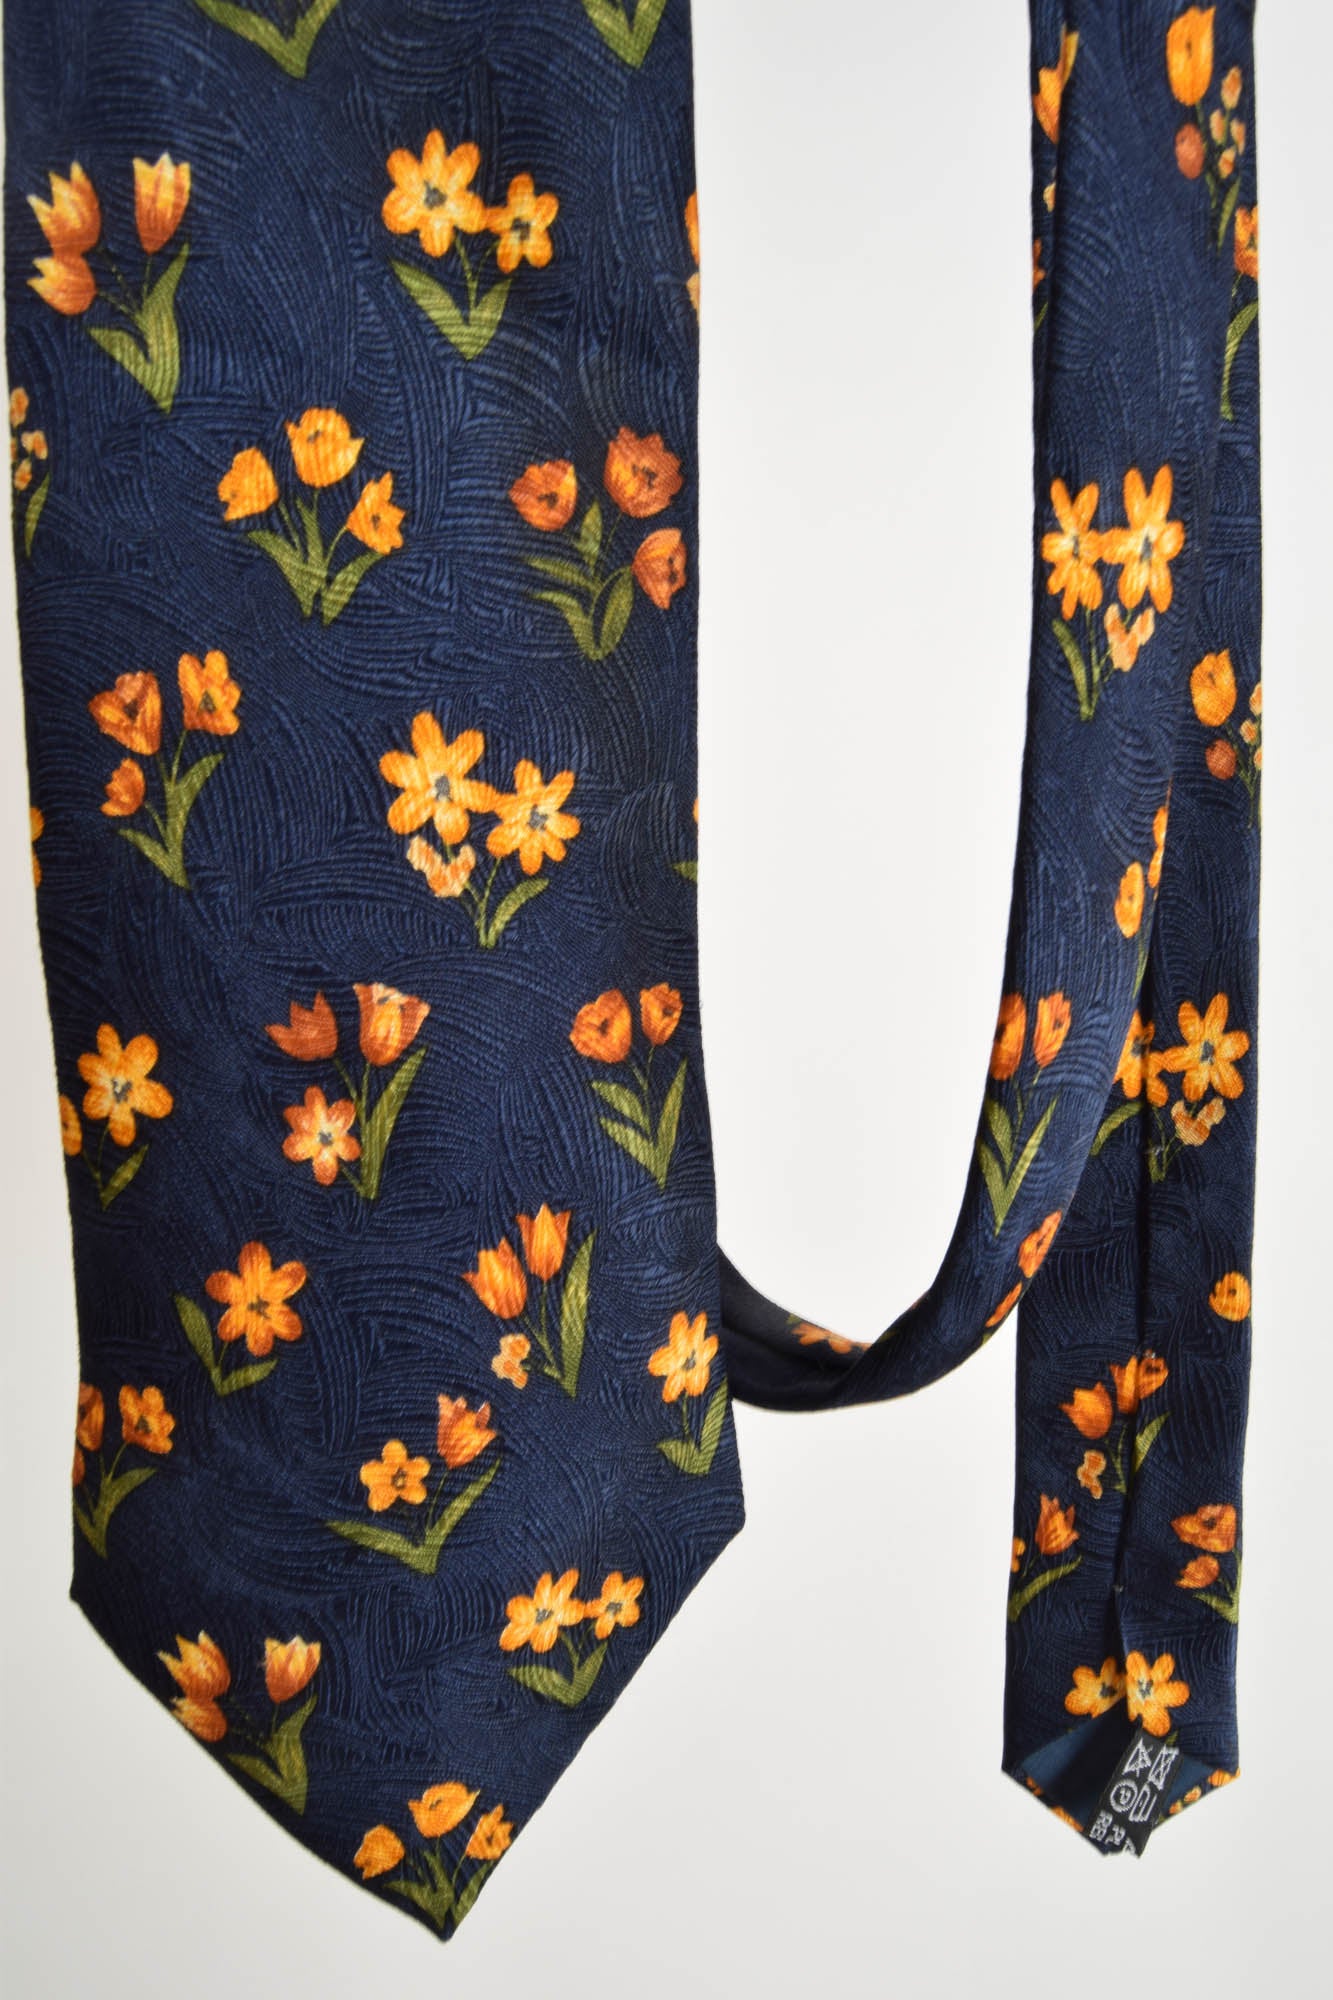 Vintage Cerruti 1881 Silk Tie Made in France 90's Floral Print